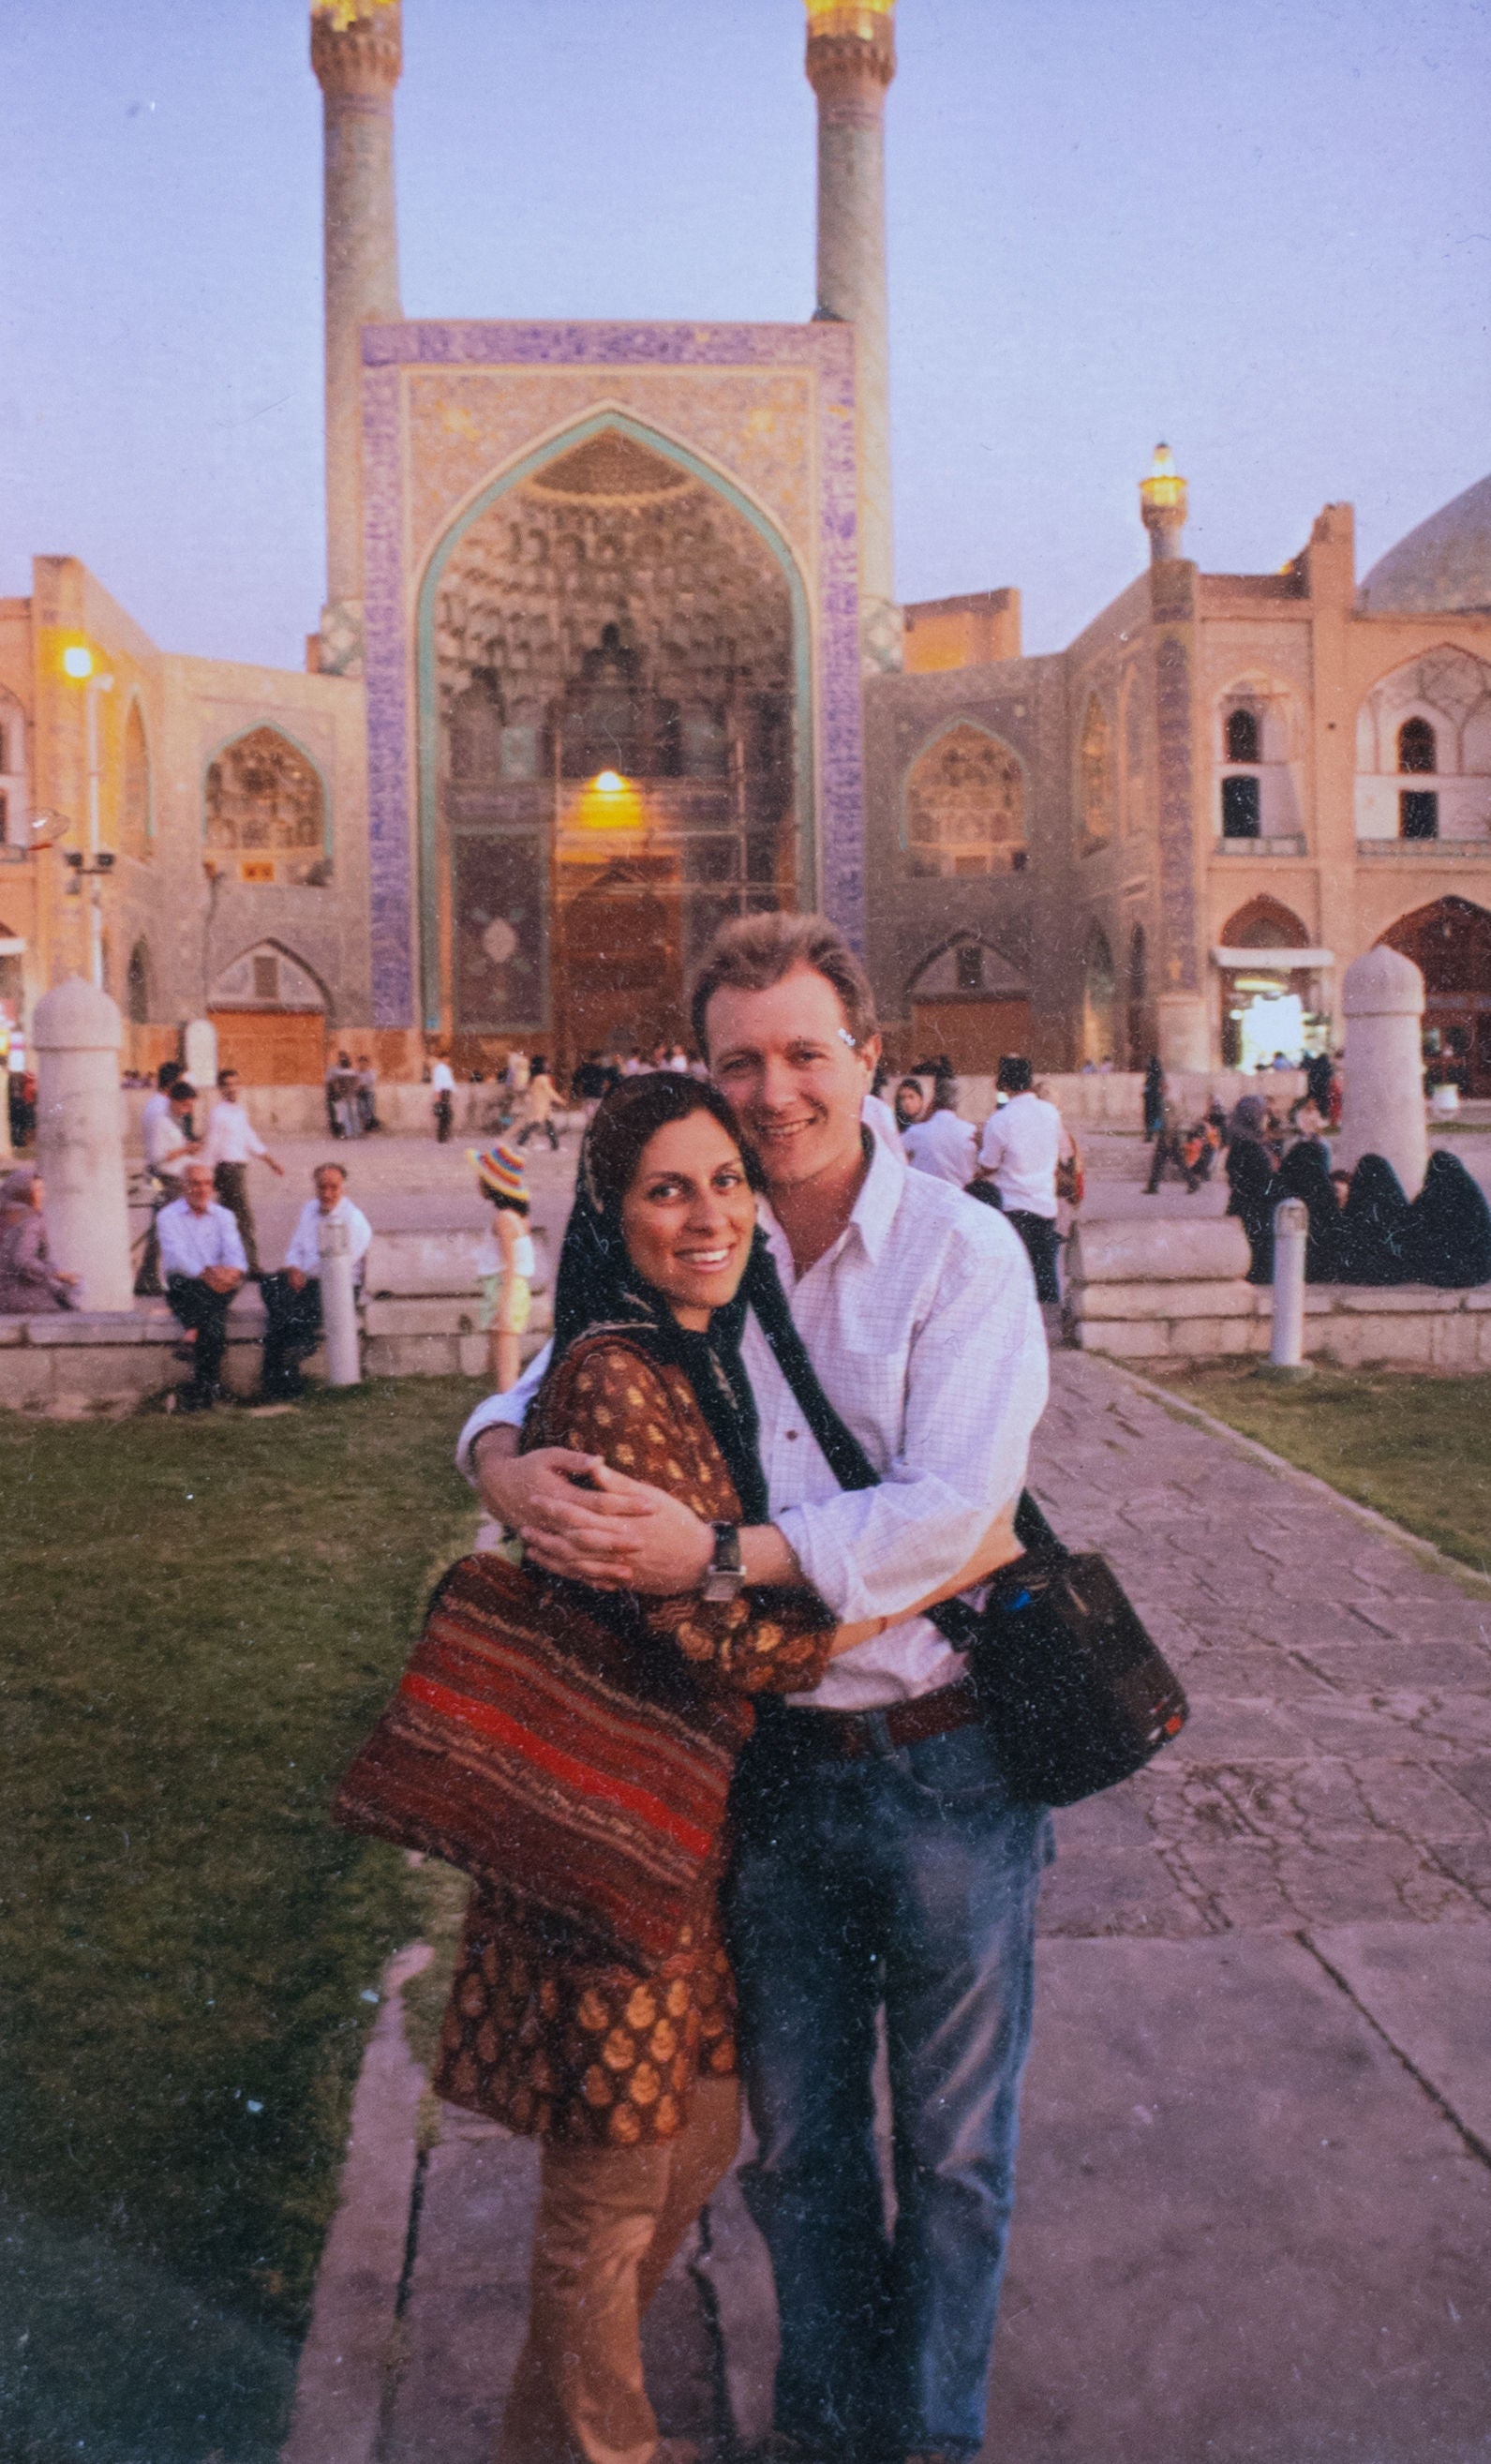 Richard Ratcliffe and his wife Nazanin Zaghari-Ratcliffe on holiday in Isfahan, Iran